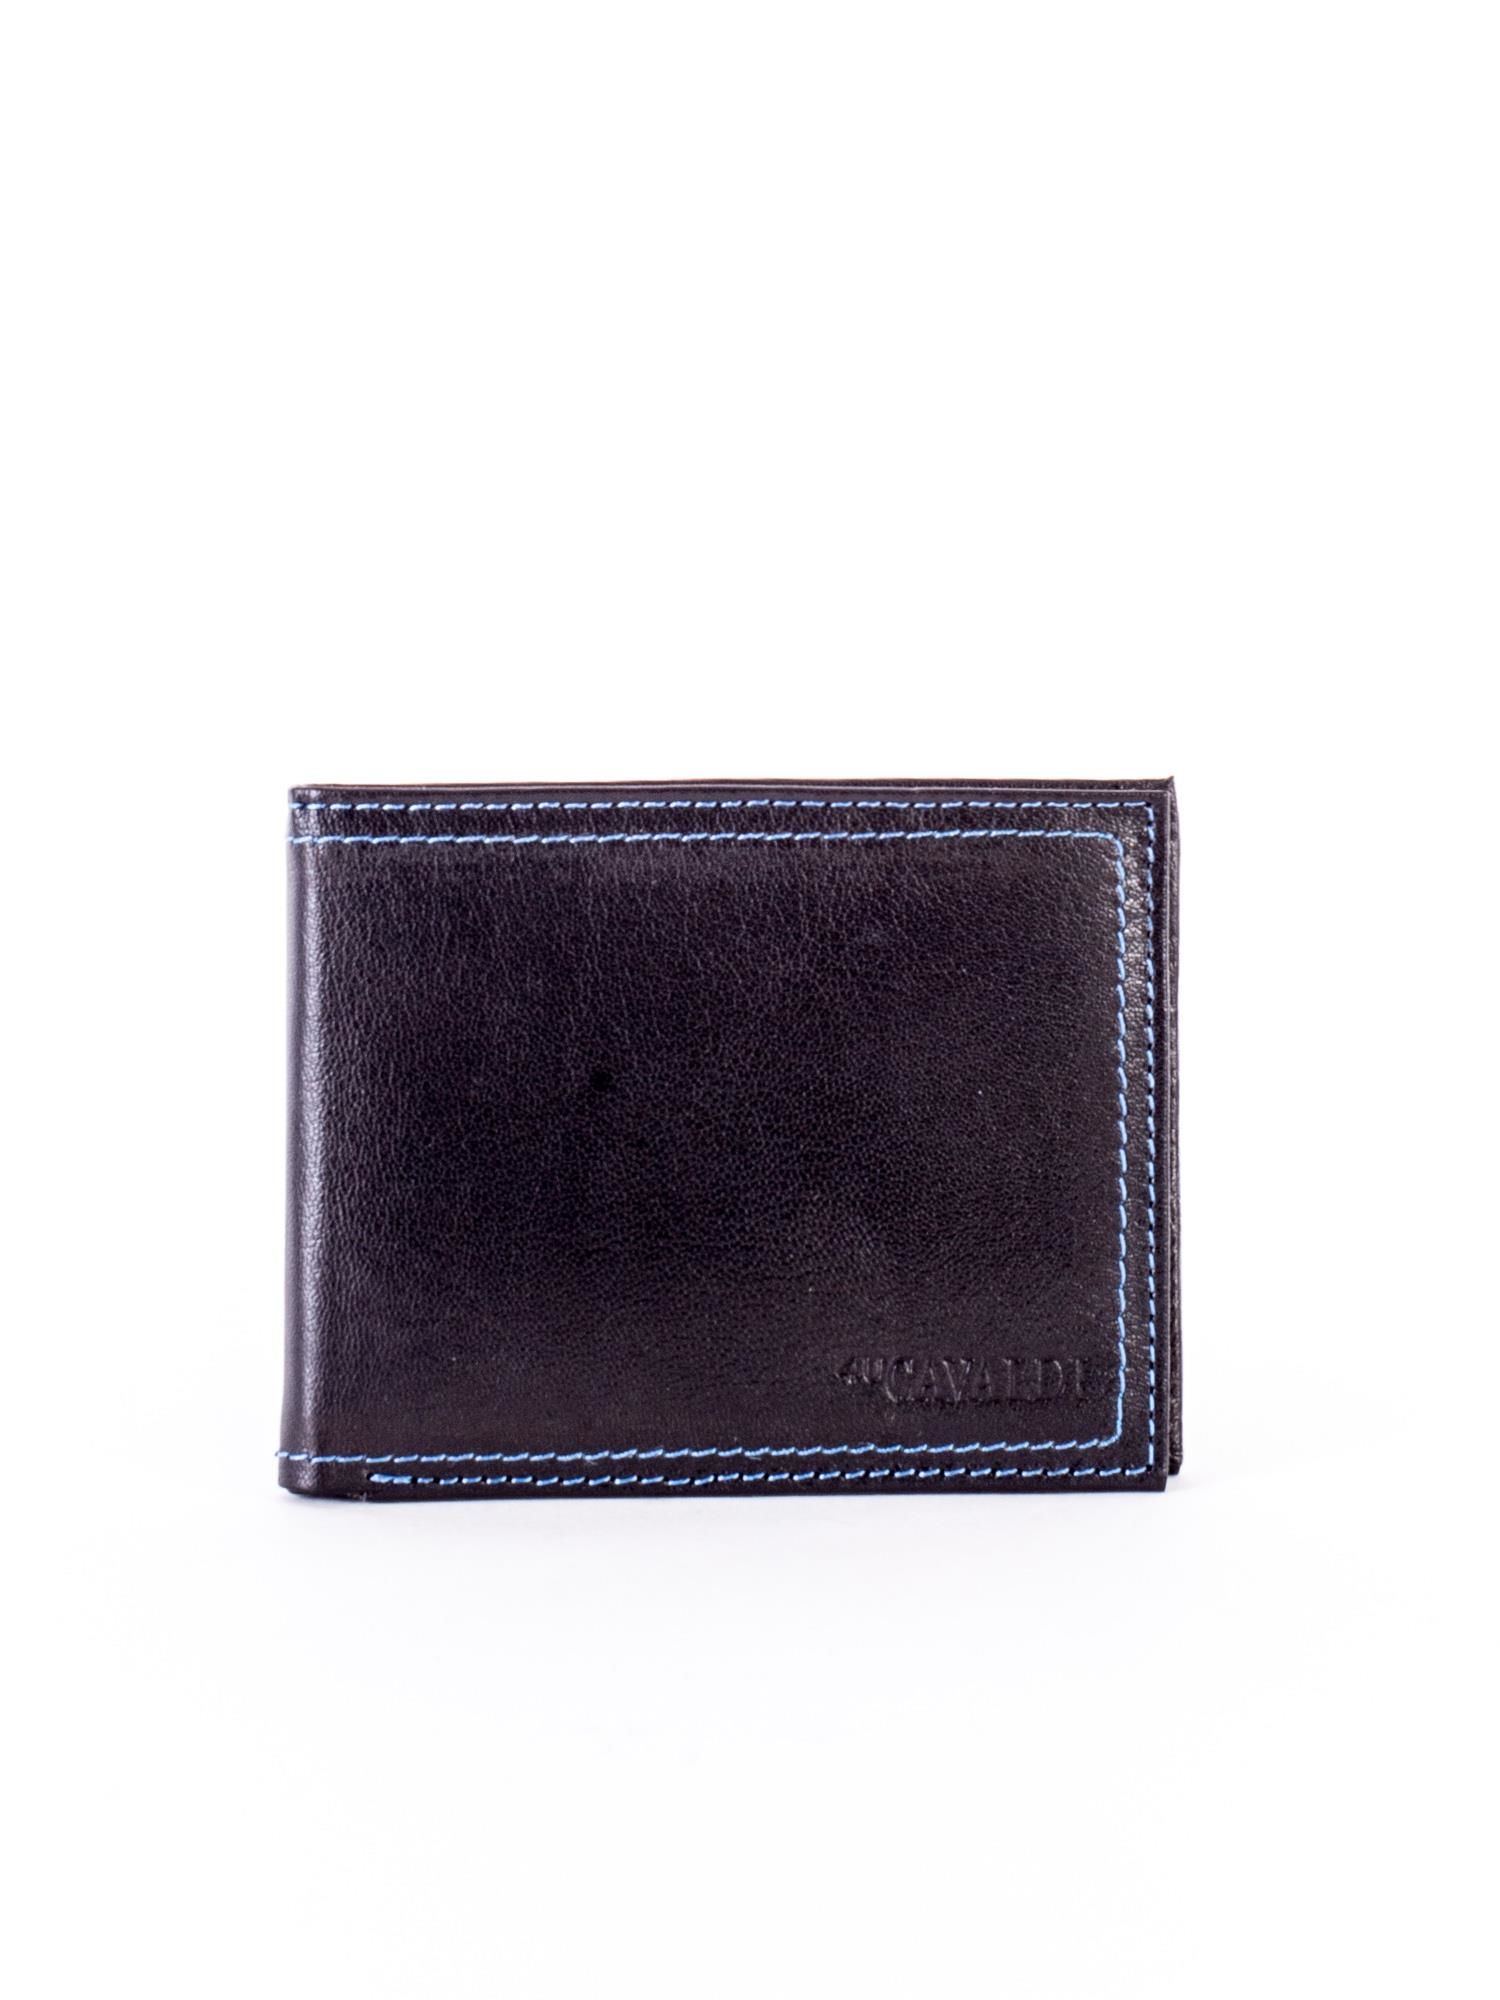 Men's black leather wallet with an elegant blue trim